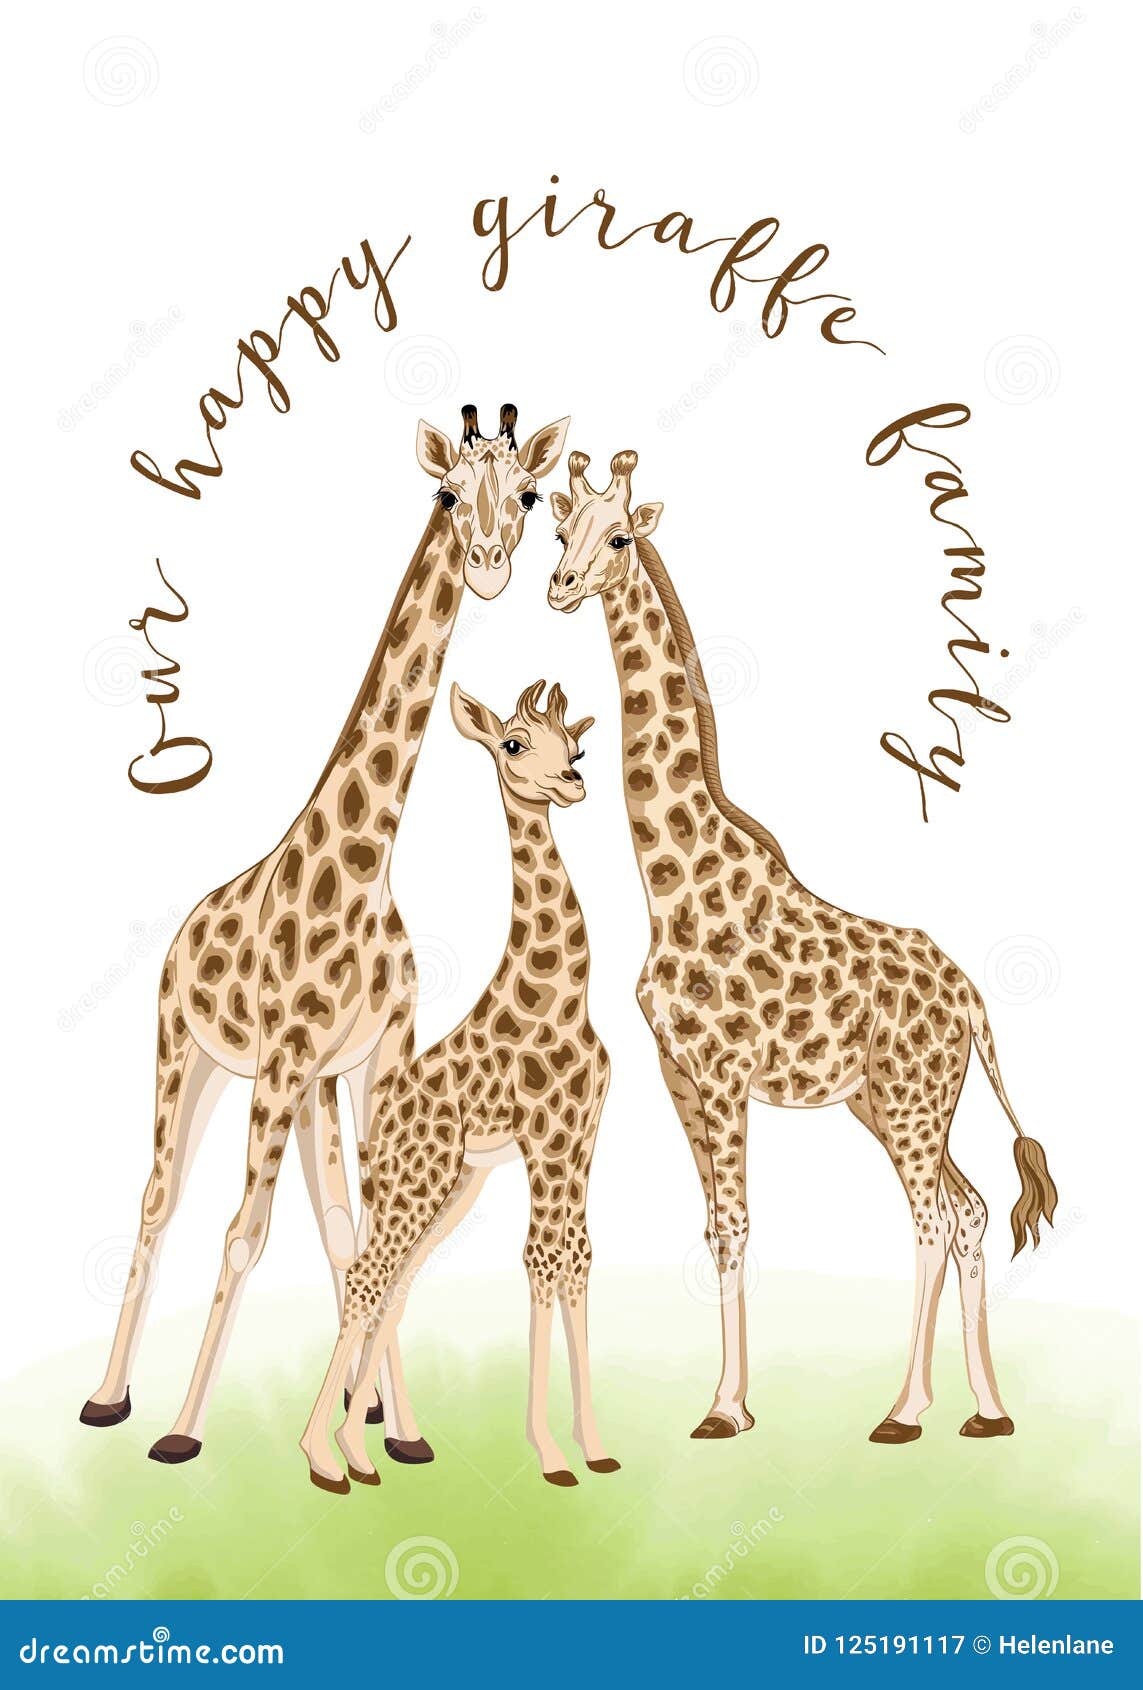 Background With Giraffe Family Vector Illustration Stock Vector Illustration Of Cover Childhood 125191117